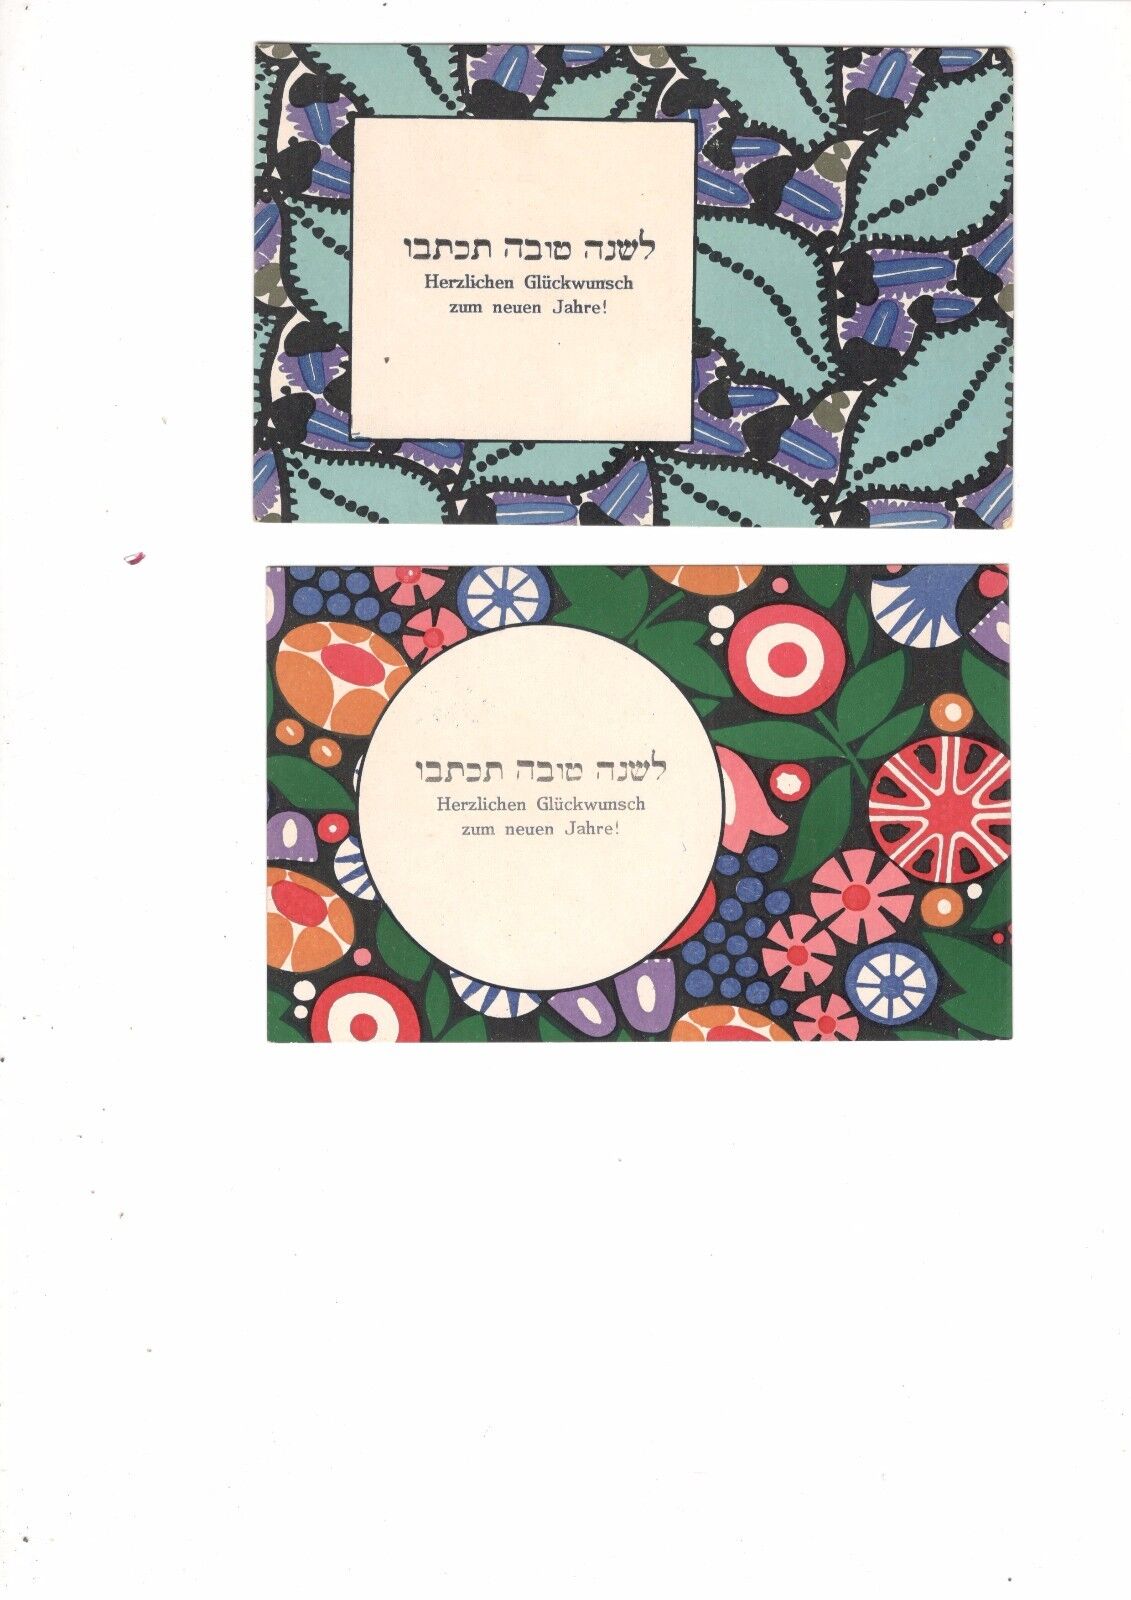 Jewish New Year / Shana Tova Judaica Color Postcard - Wiener Werkstatte Austria